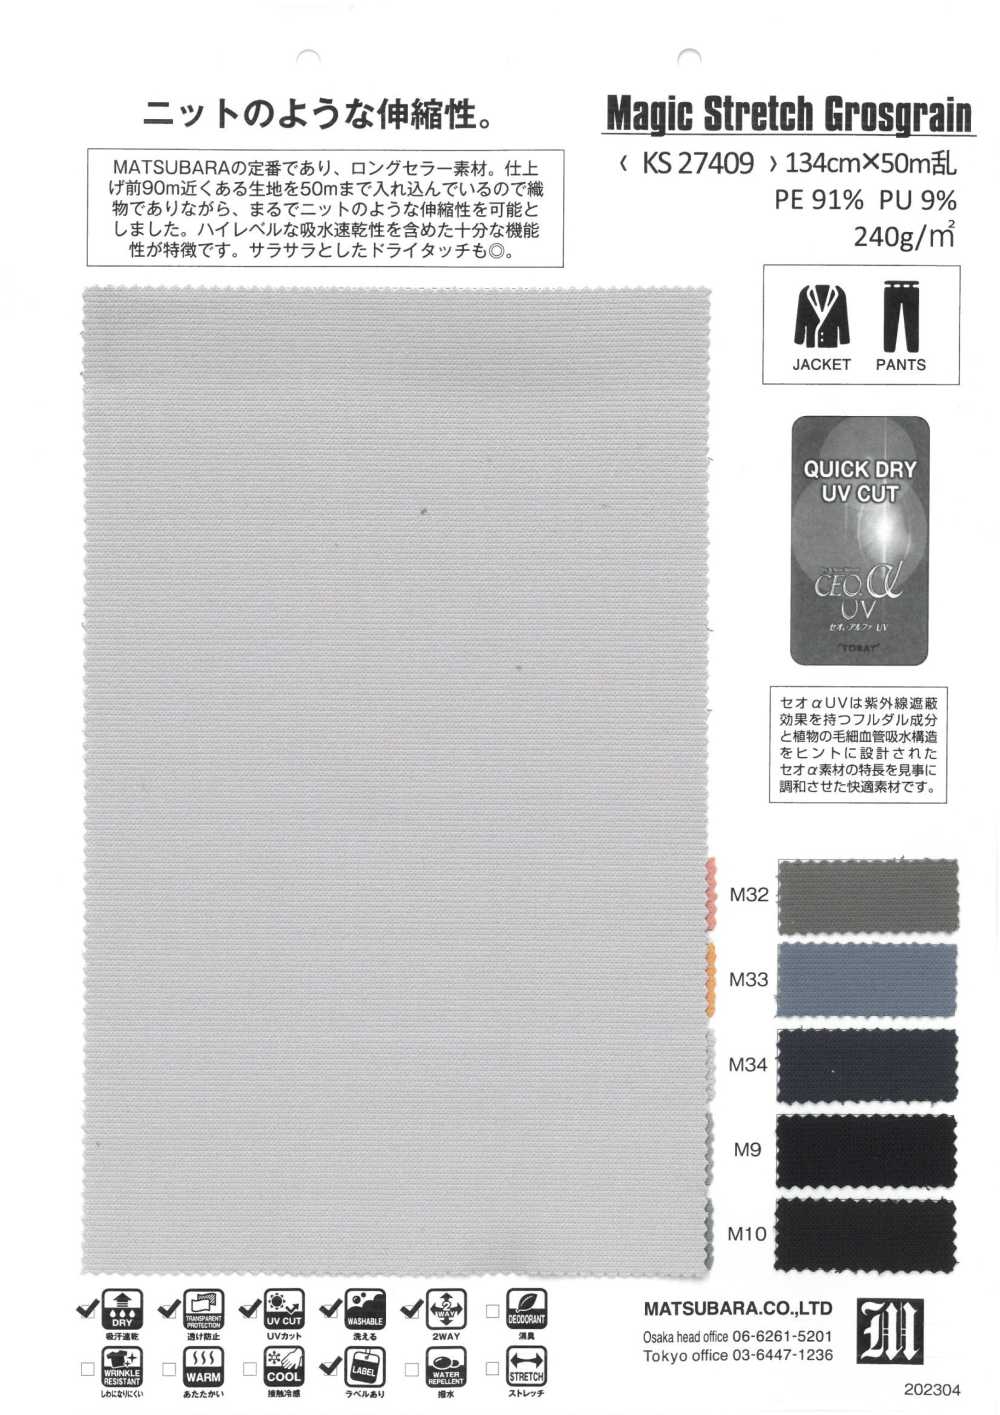 KS27409 Magic Stretch Grosgrain[Textile / Fabric] Matsubara